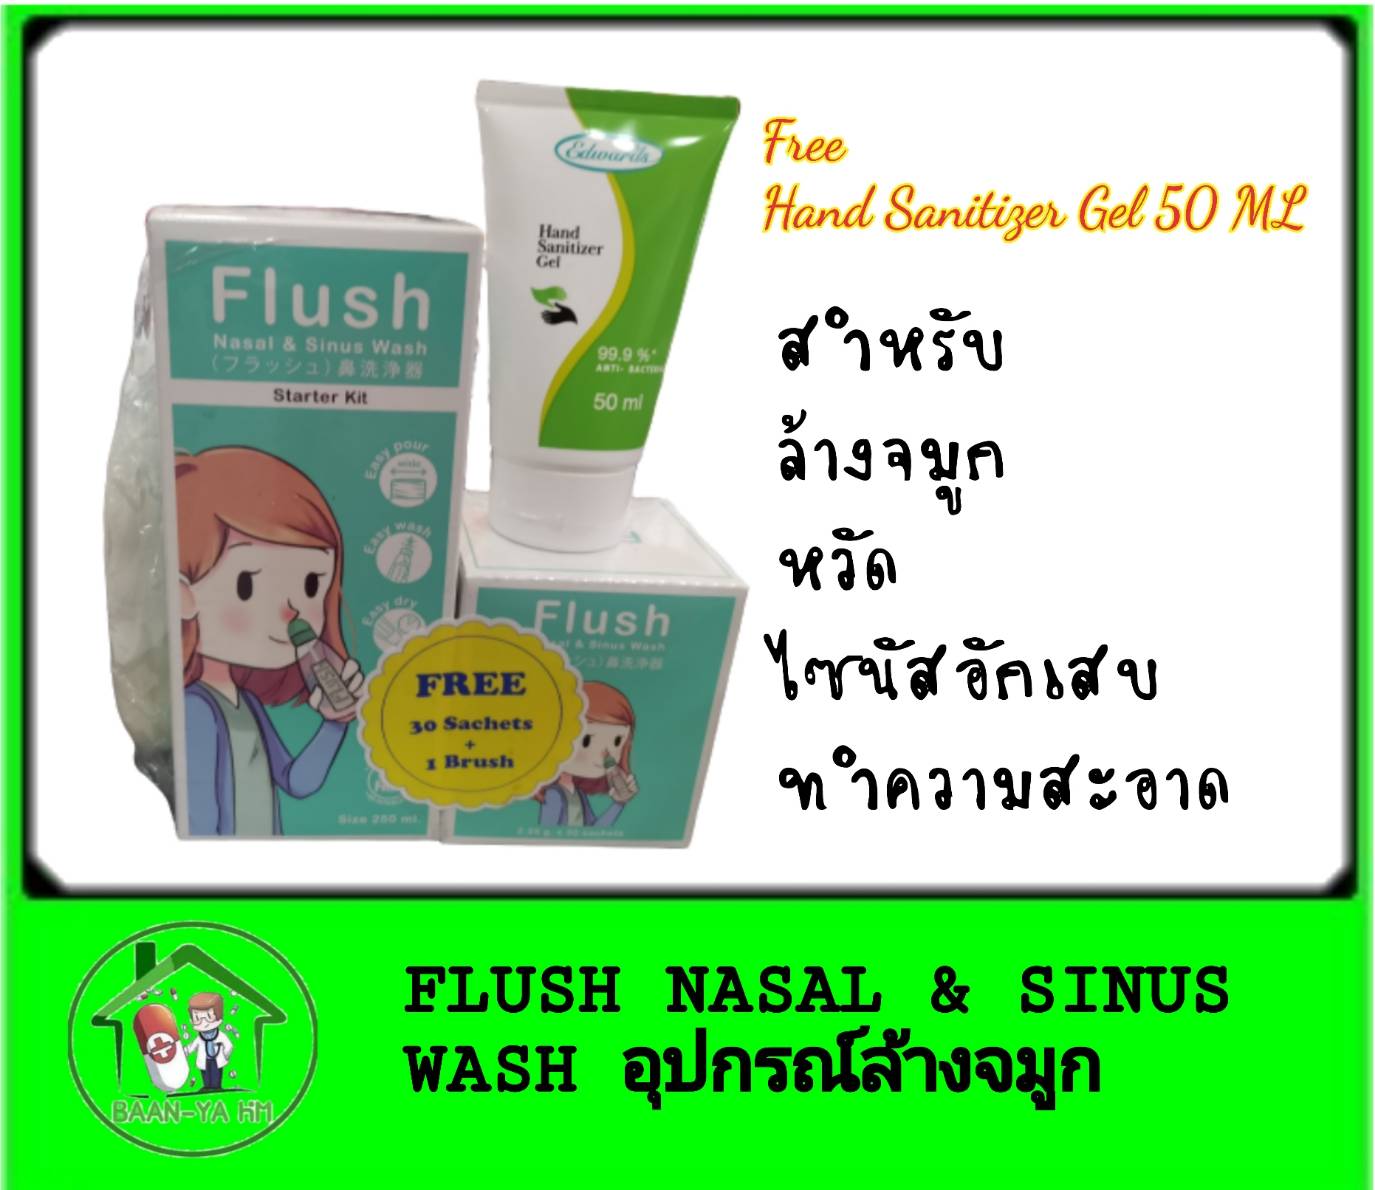 Flush Nasal and Sinus Wash Free อุปกรณ์สำหรับล้างจมูก+แปรงล้าง +ซองเกลือ 30 ซอง ครบเซต ฟรี เจลล้างมือ 50 ML 1 หลอด